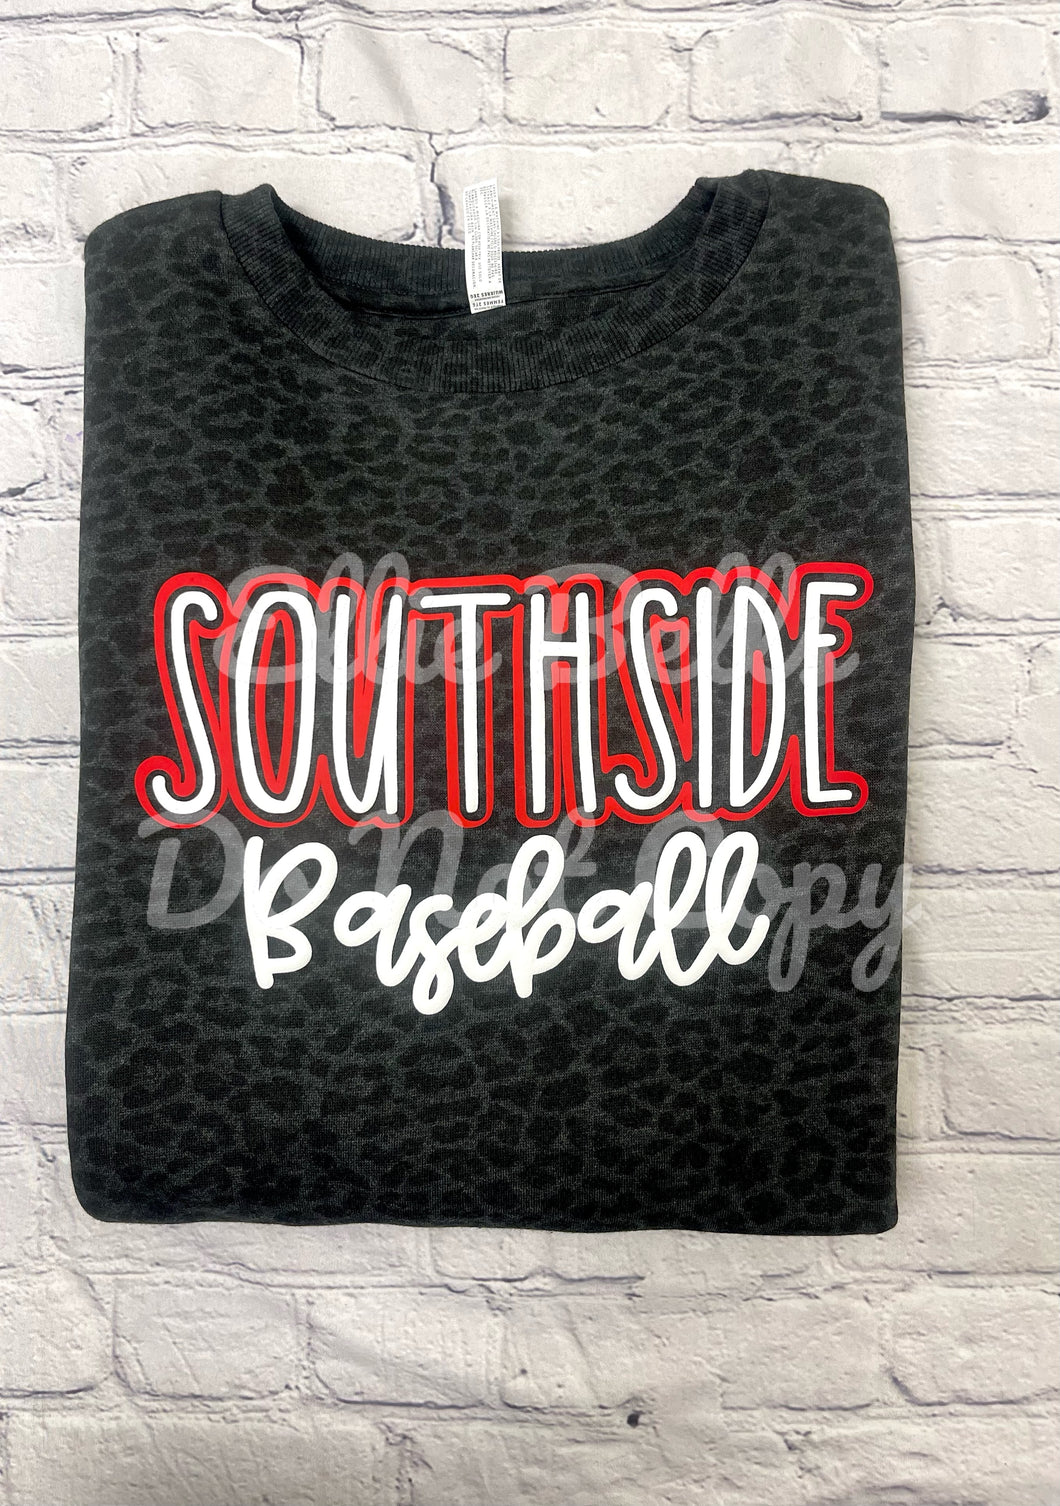 Southside Baseball or Softball Cheetah Shirt